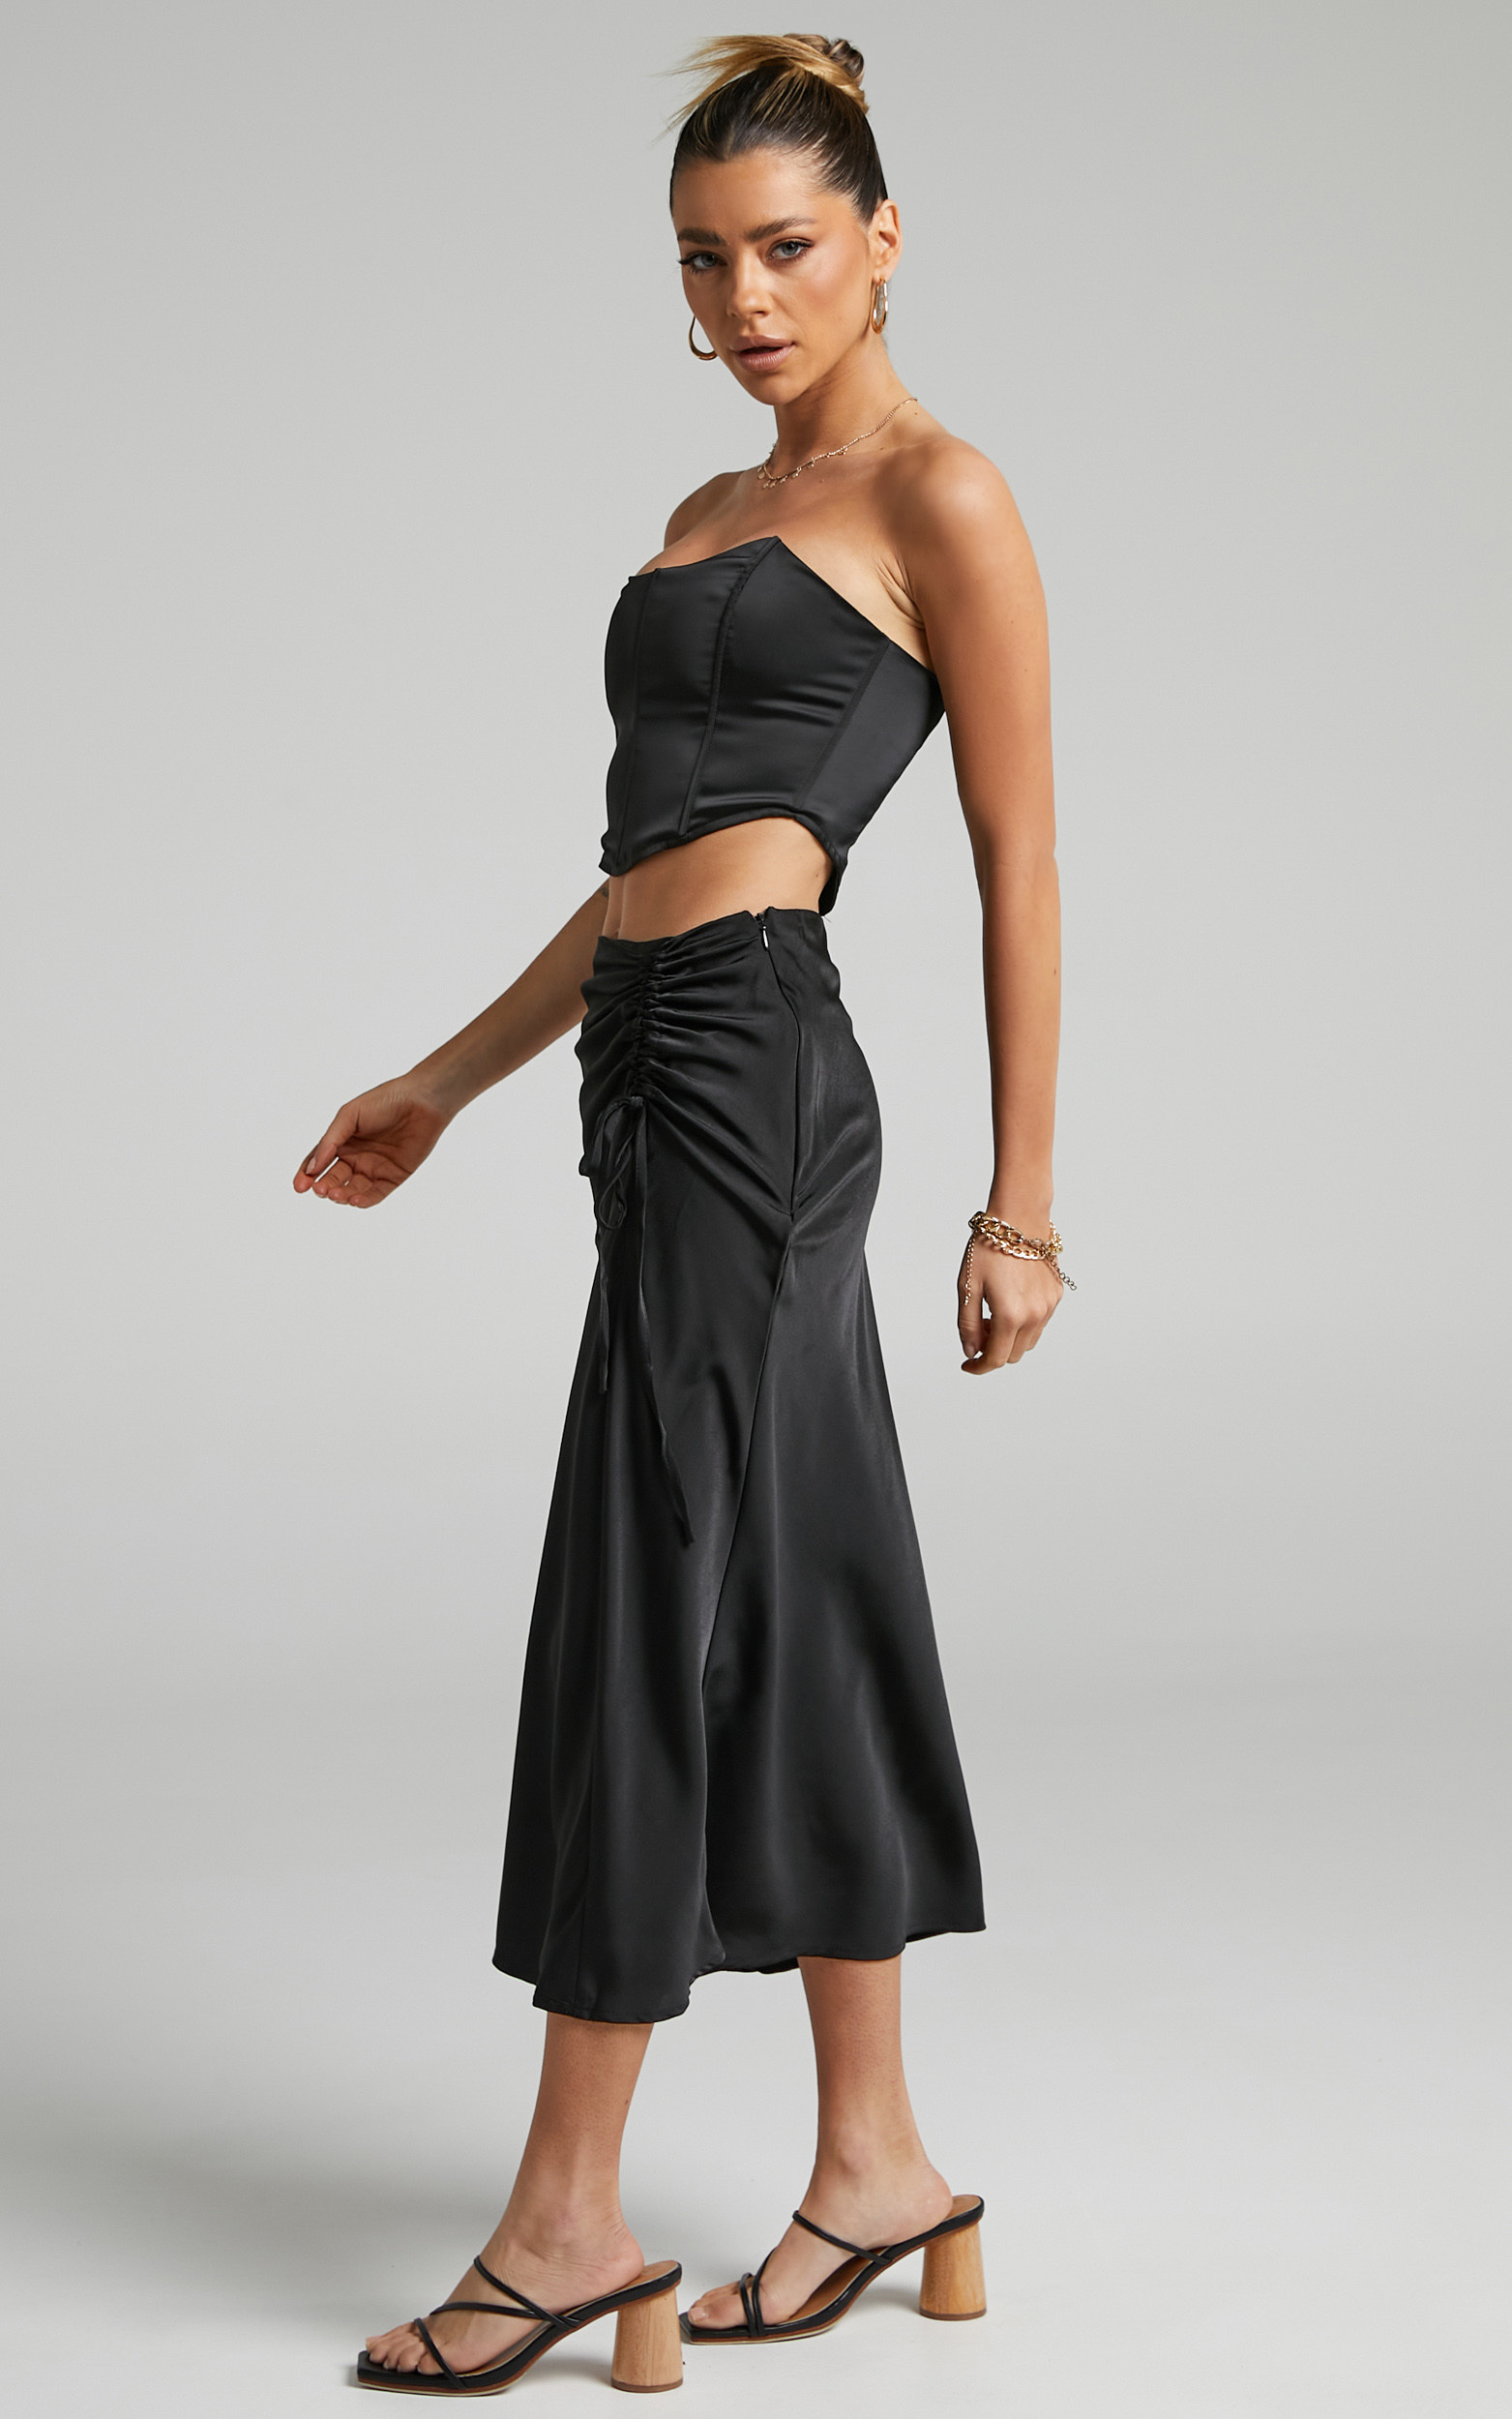 Zaylin Midi Skirt - Ruched Side Satin Slip Skirt in Black - 04, BLK3, hi-res image number null